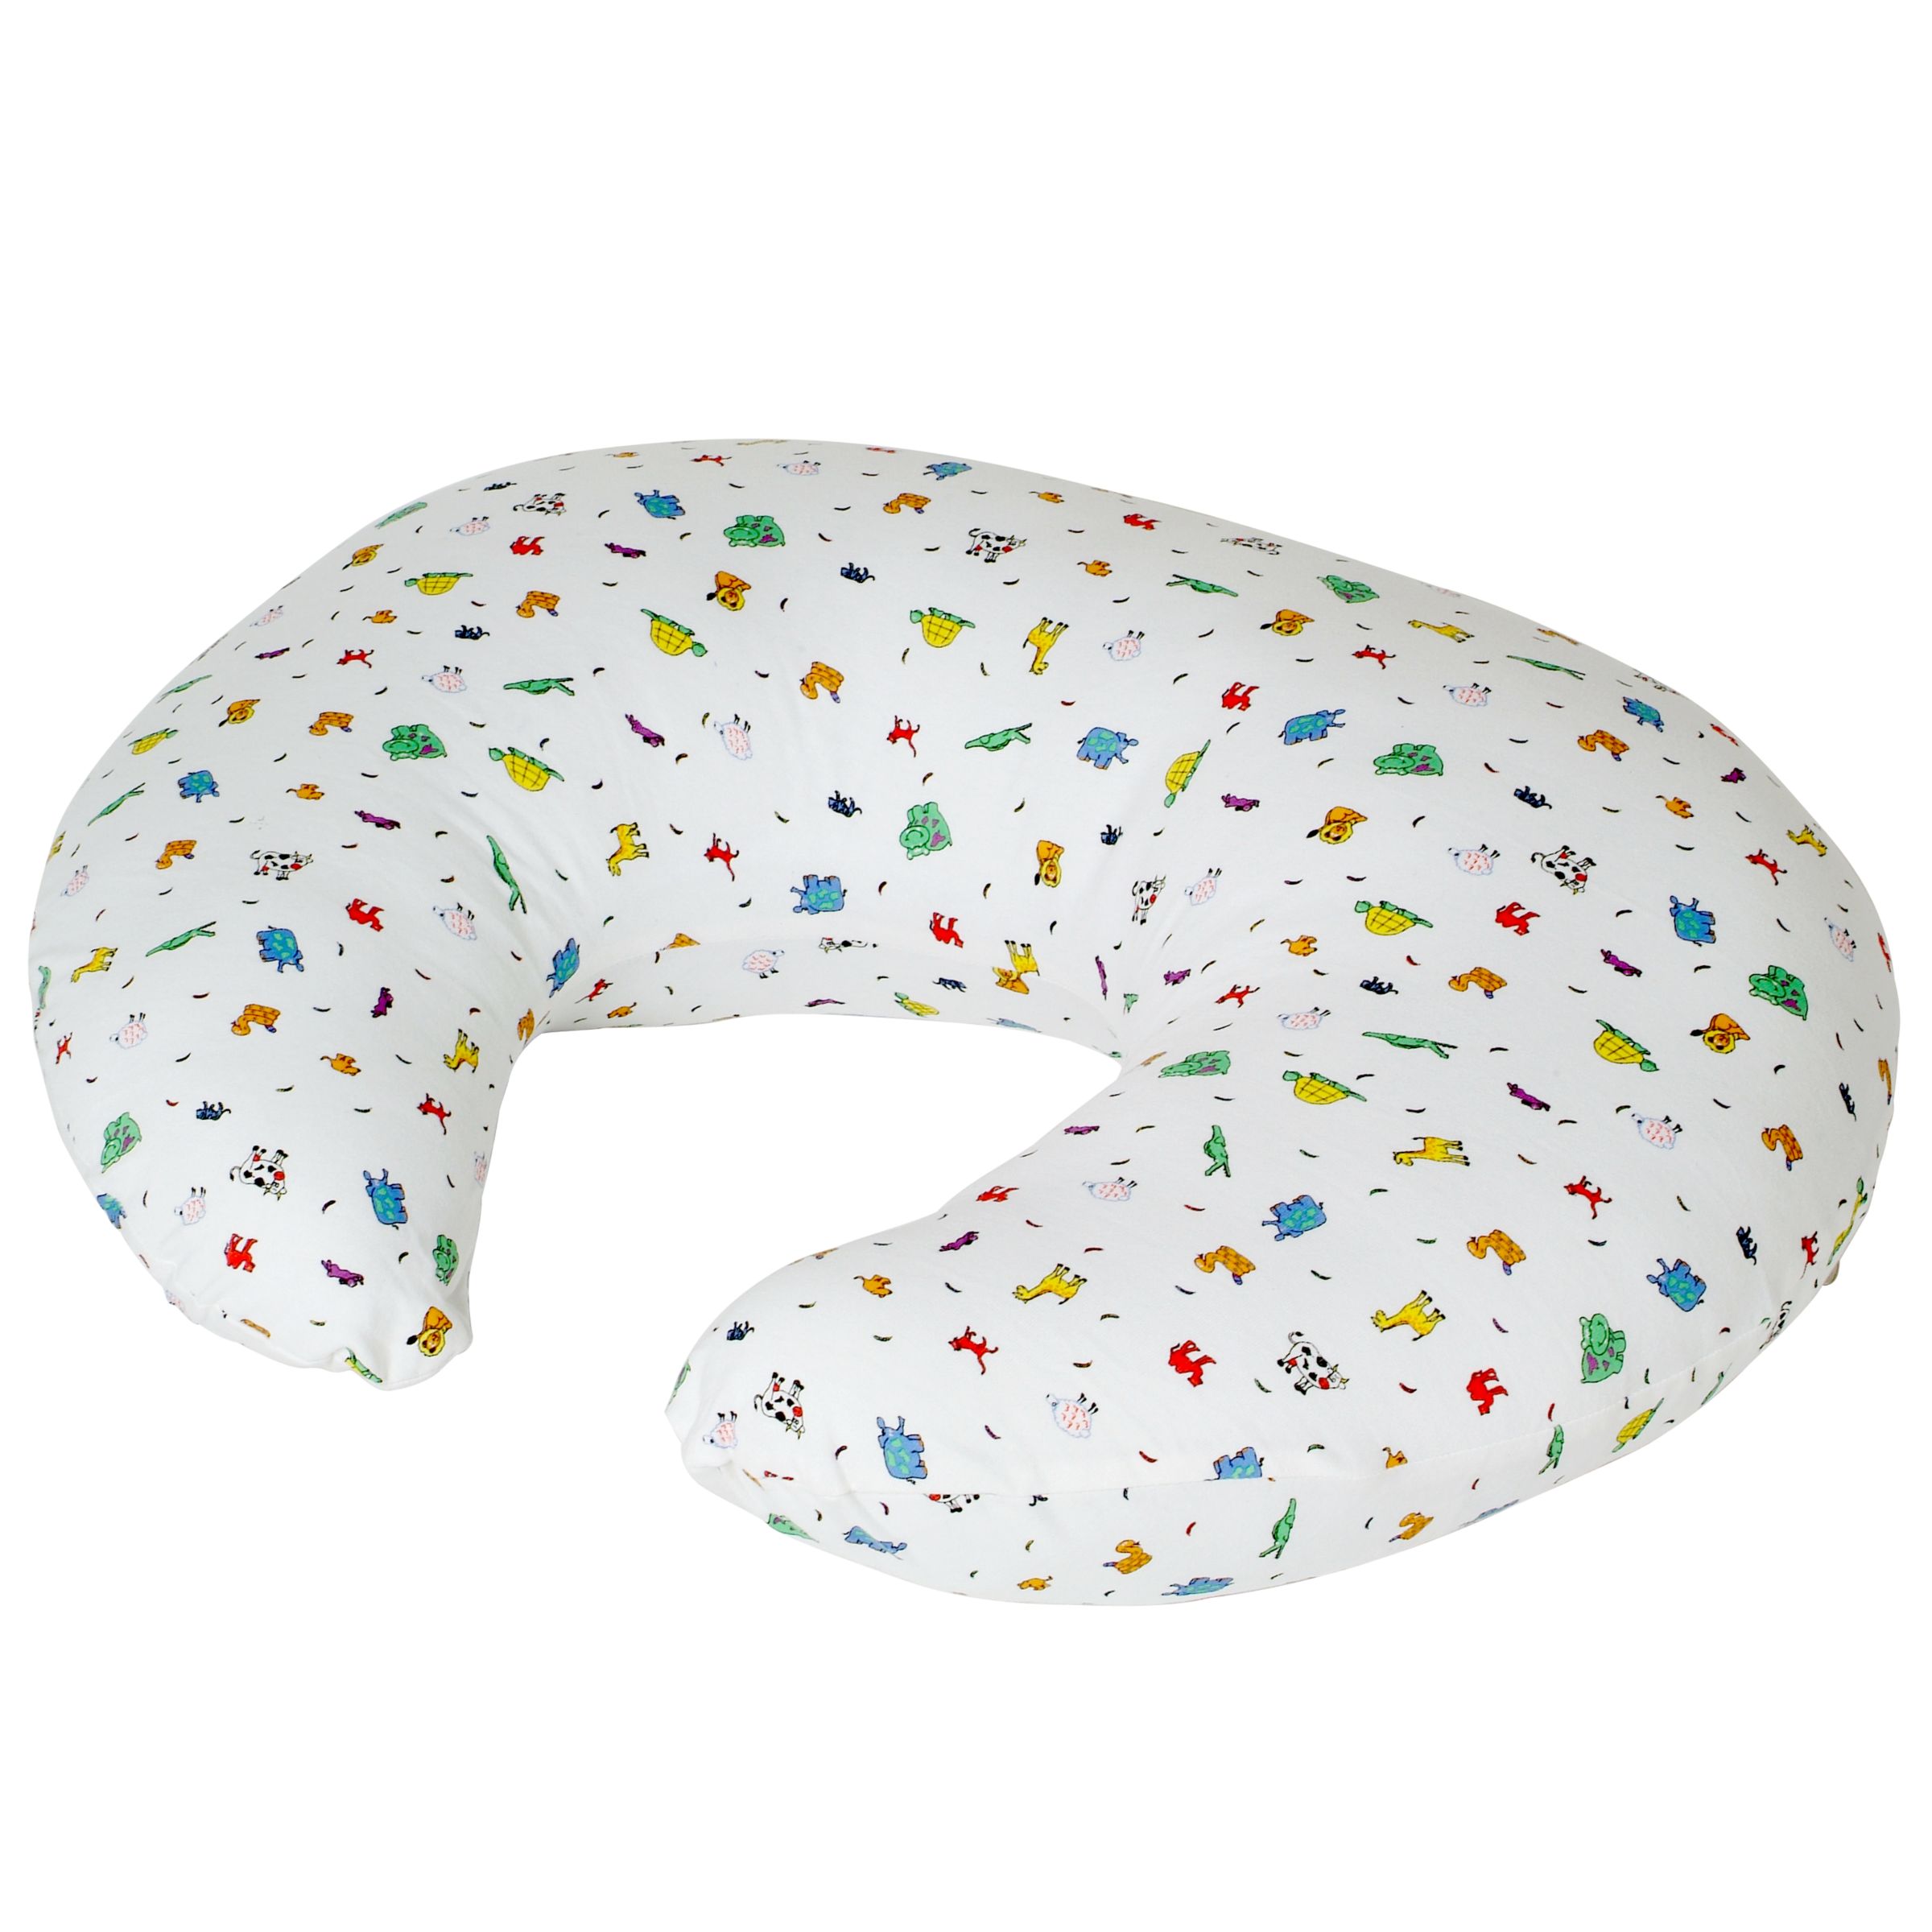 Widgey Donut Pillow Cover, Animal 230480482